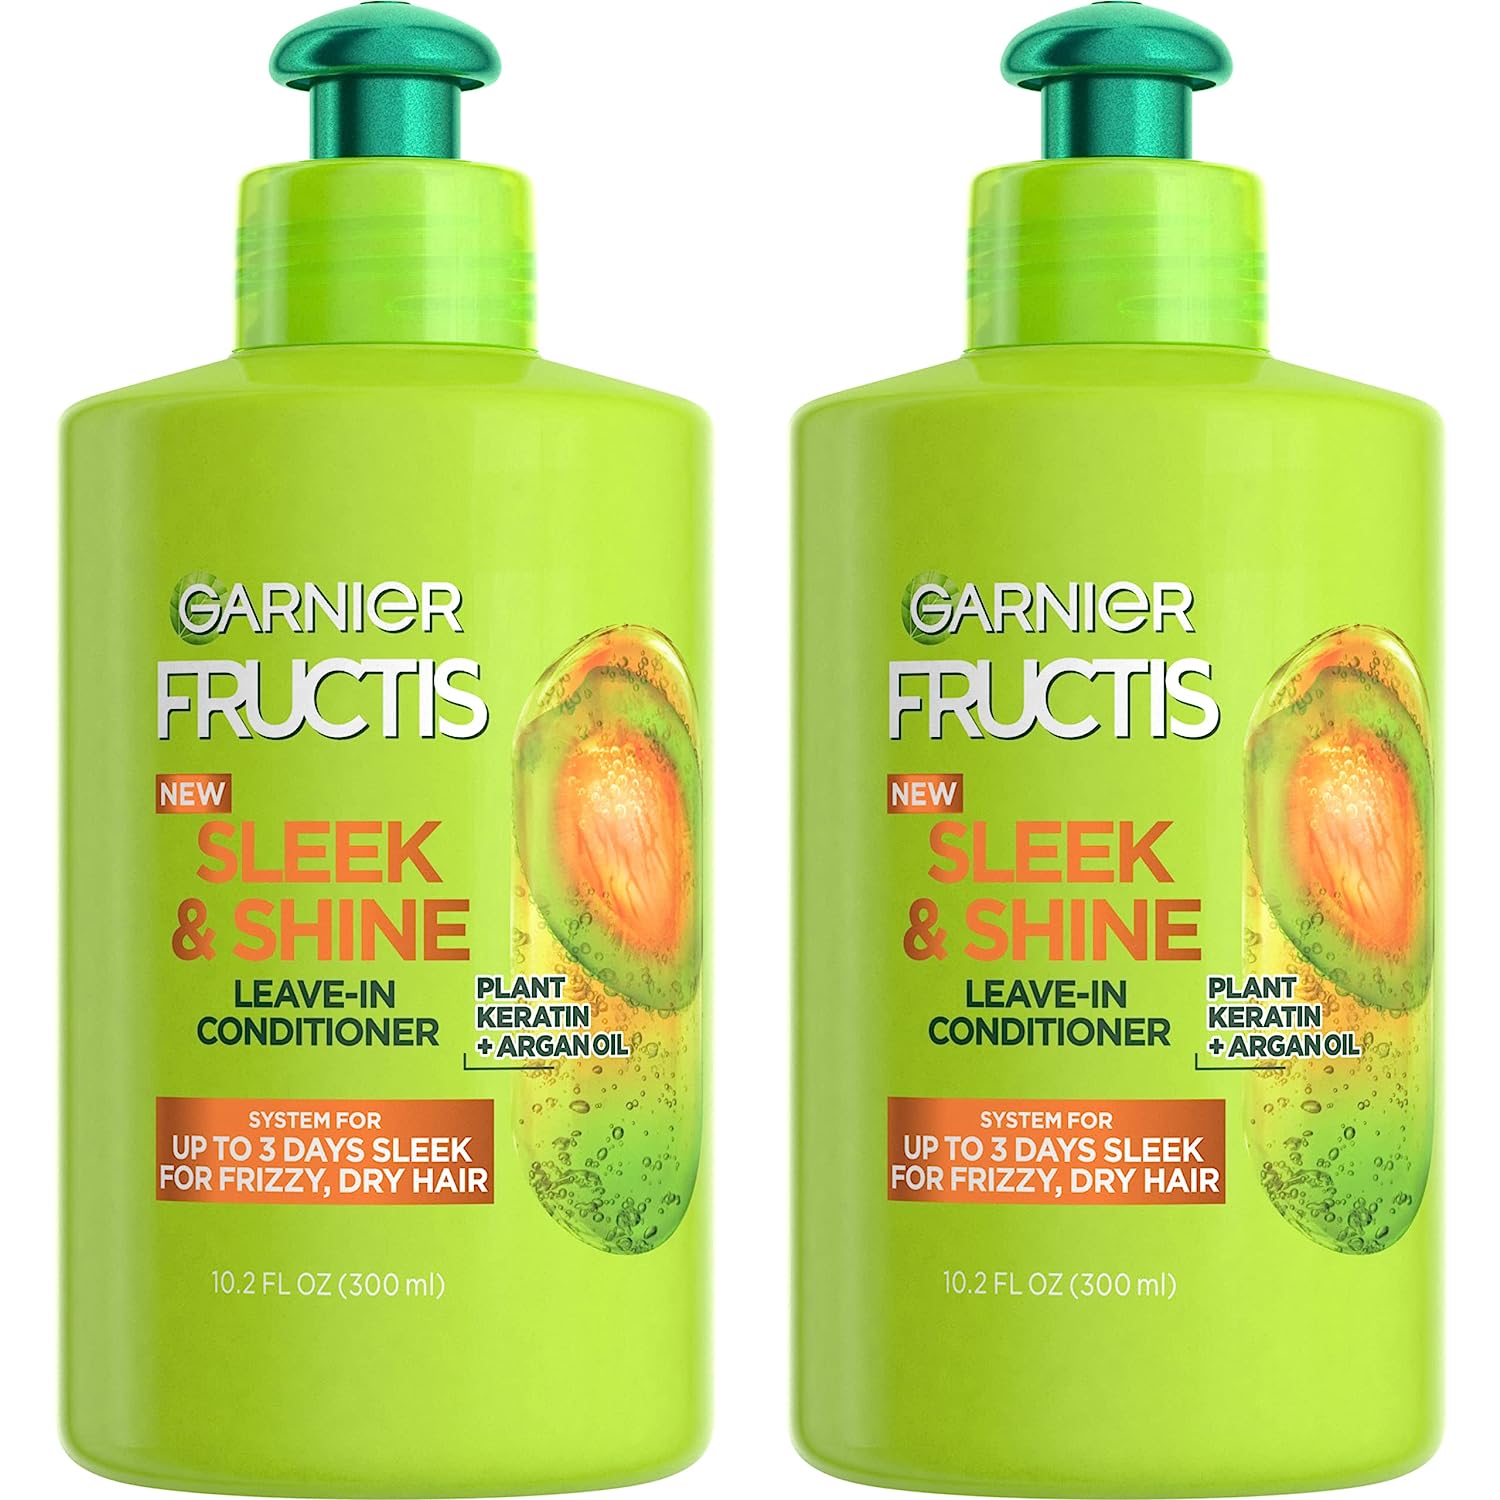 Garnier Fructis Sleek & Shine Leave-In Conditioning [...]